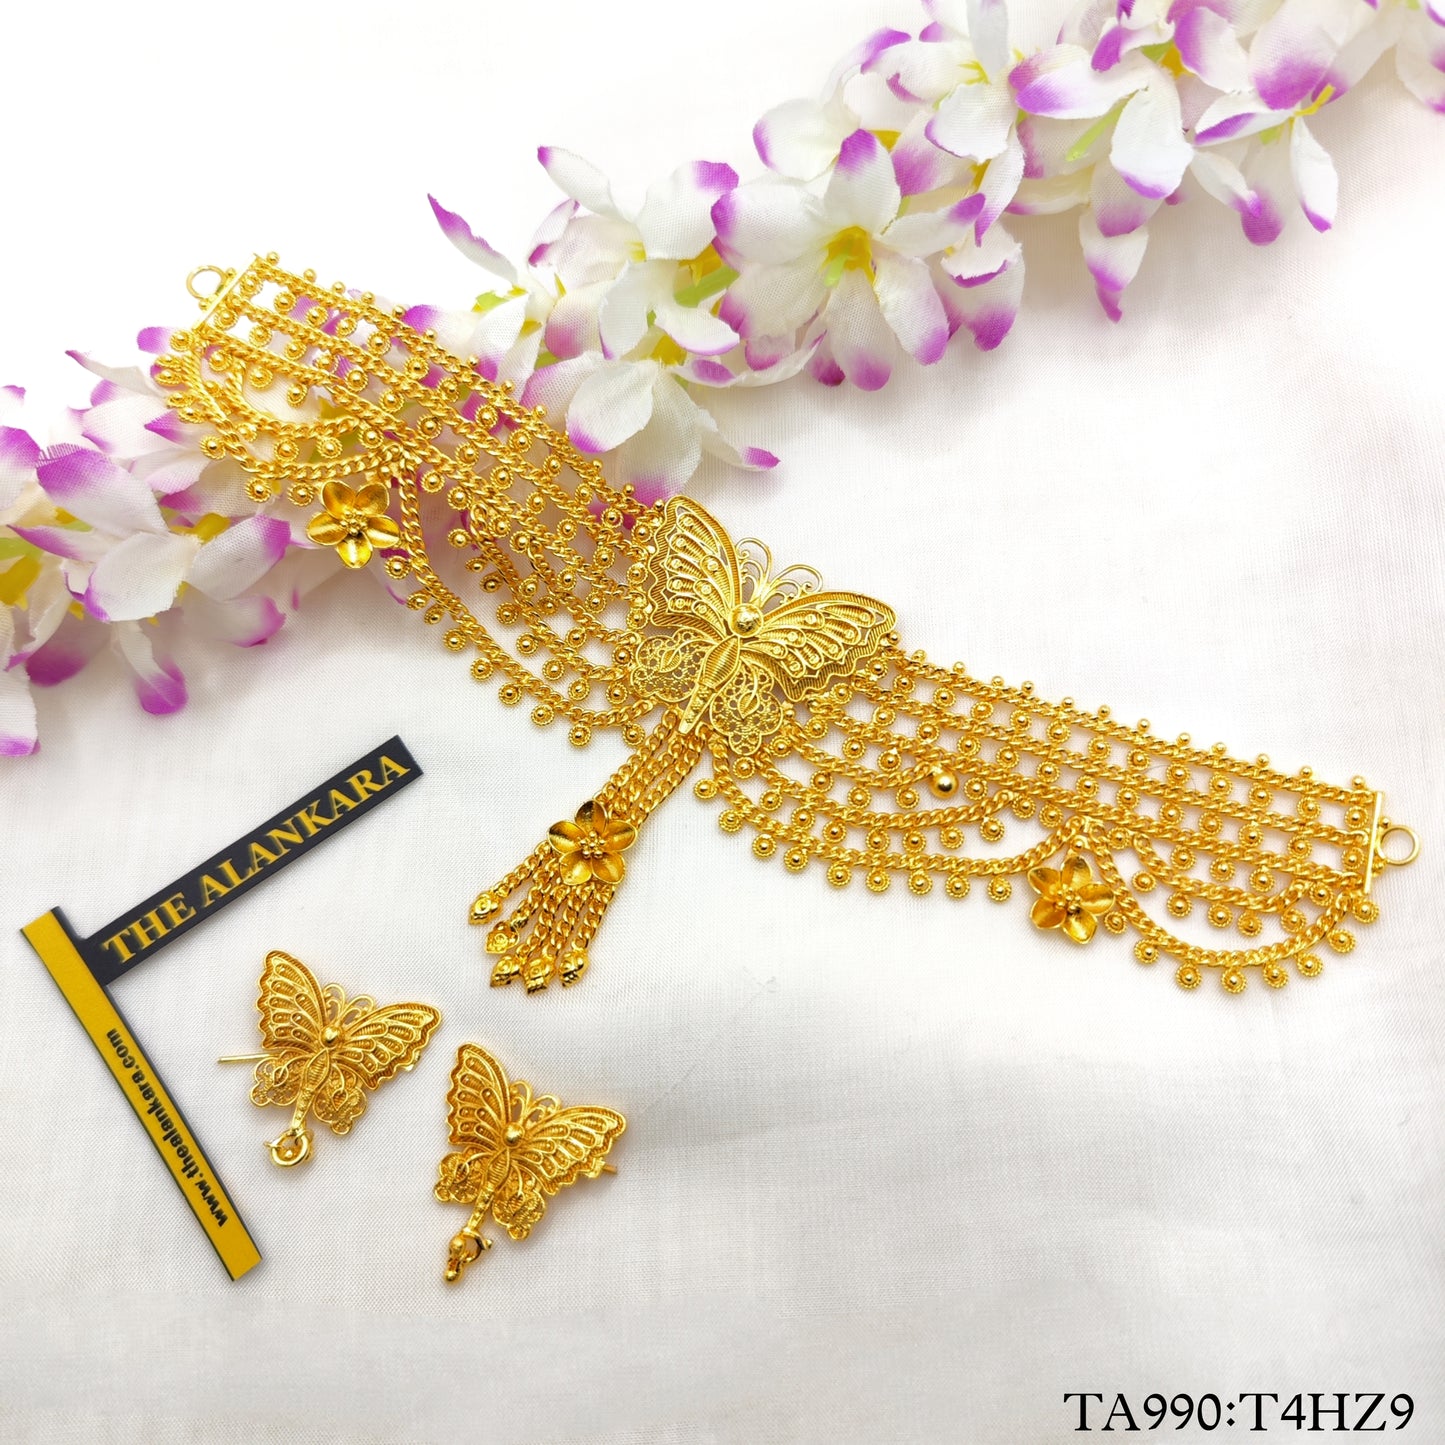 Butterfly Motif Lohori Gold Plated Belt Choker Necklace With Earrings Set